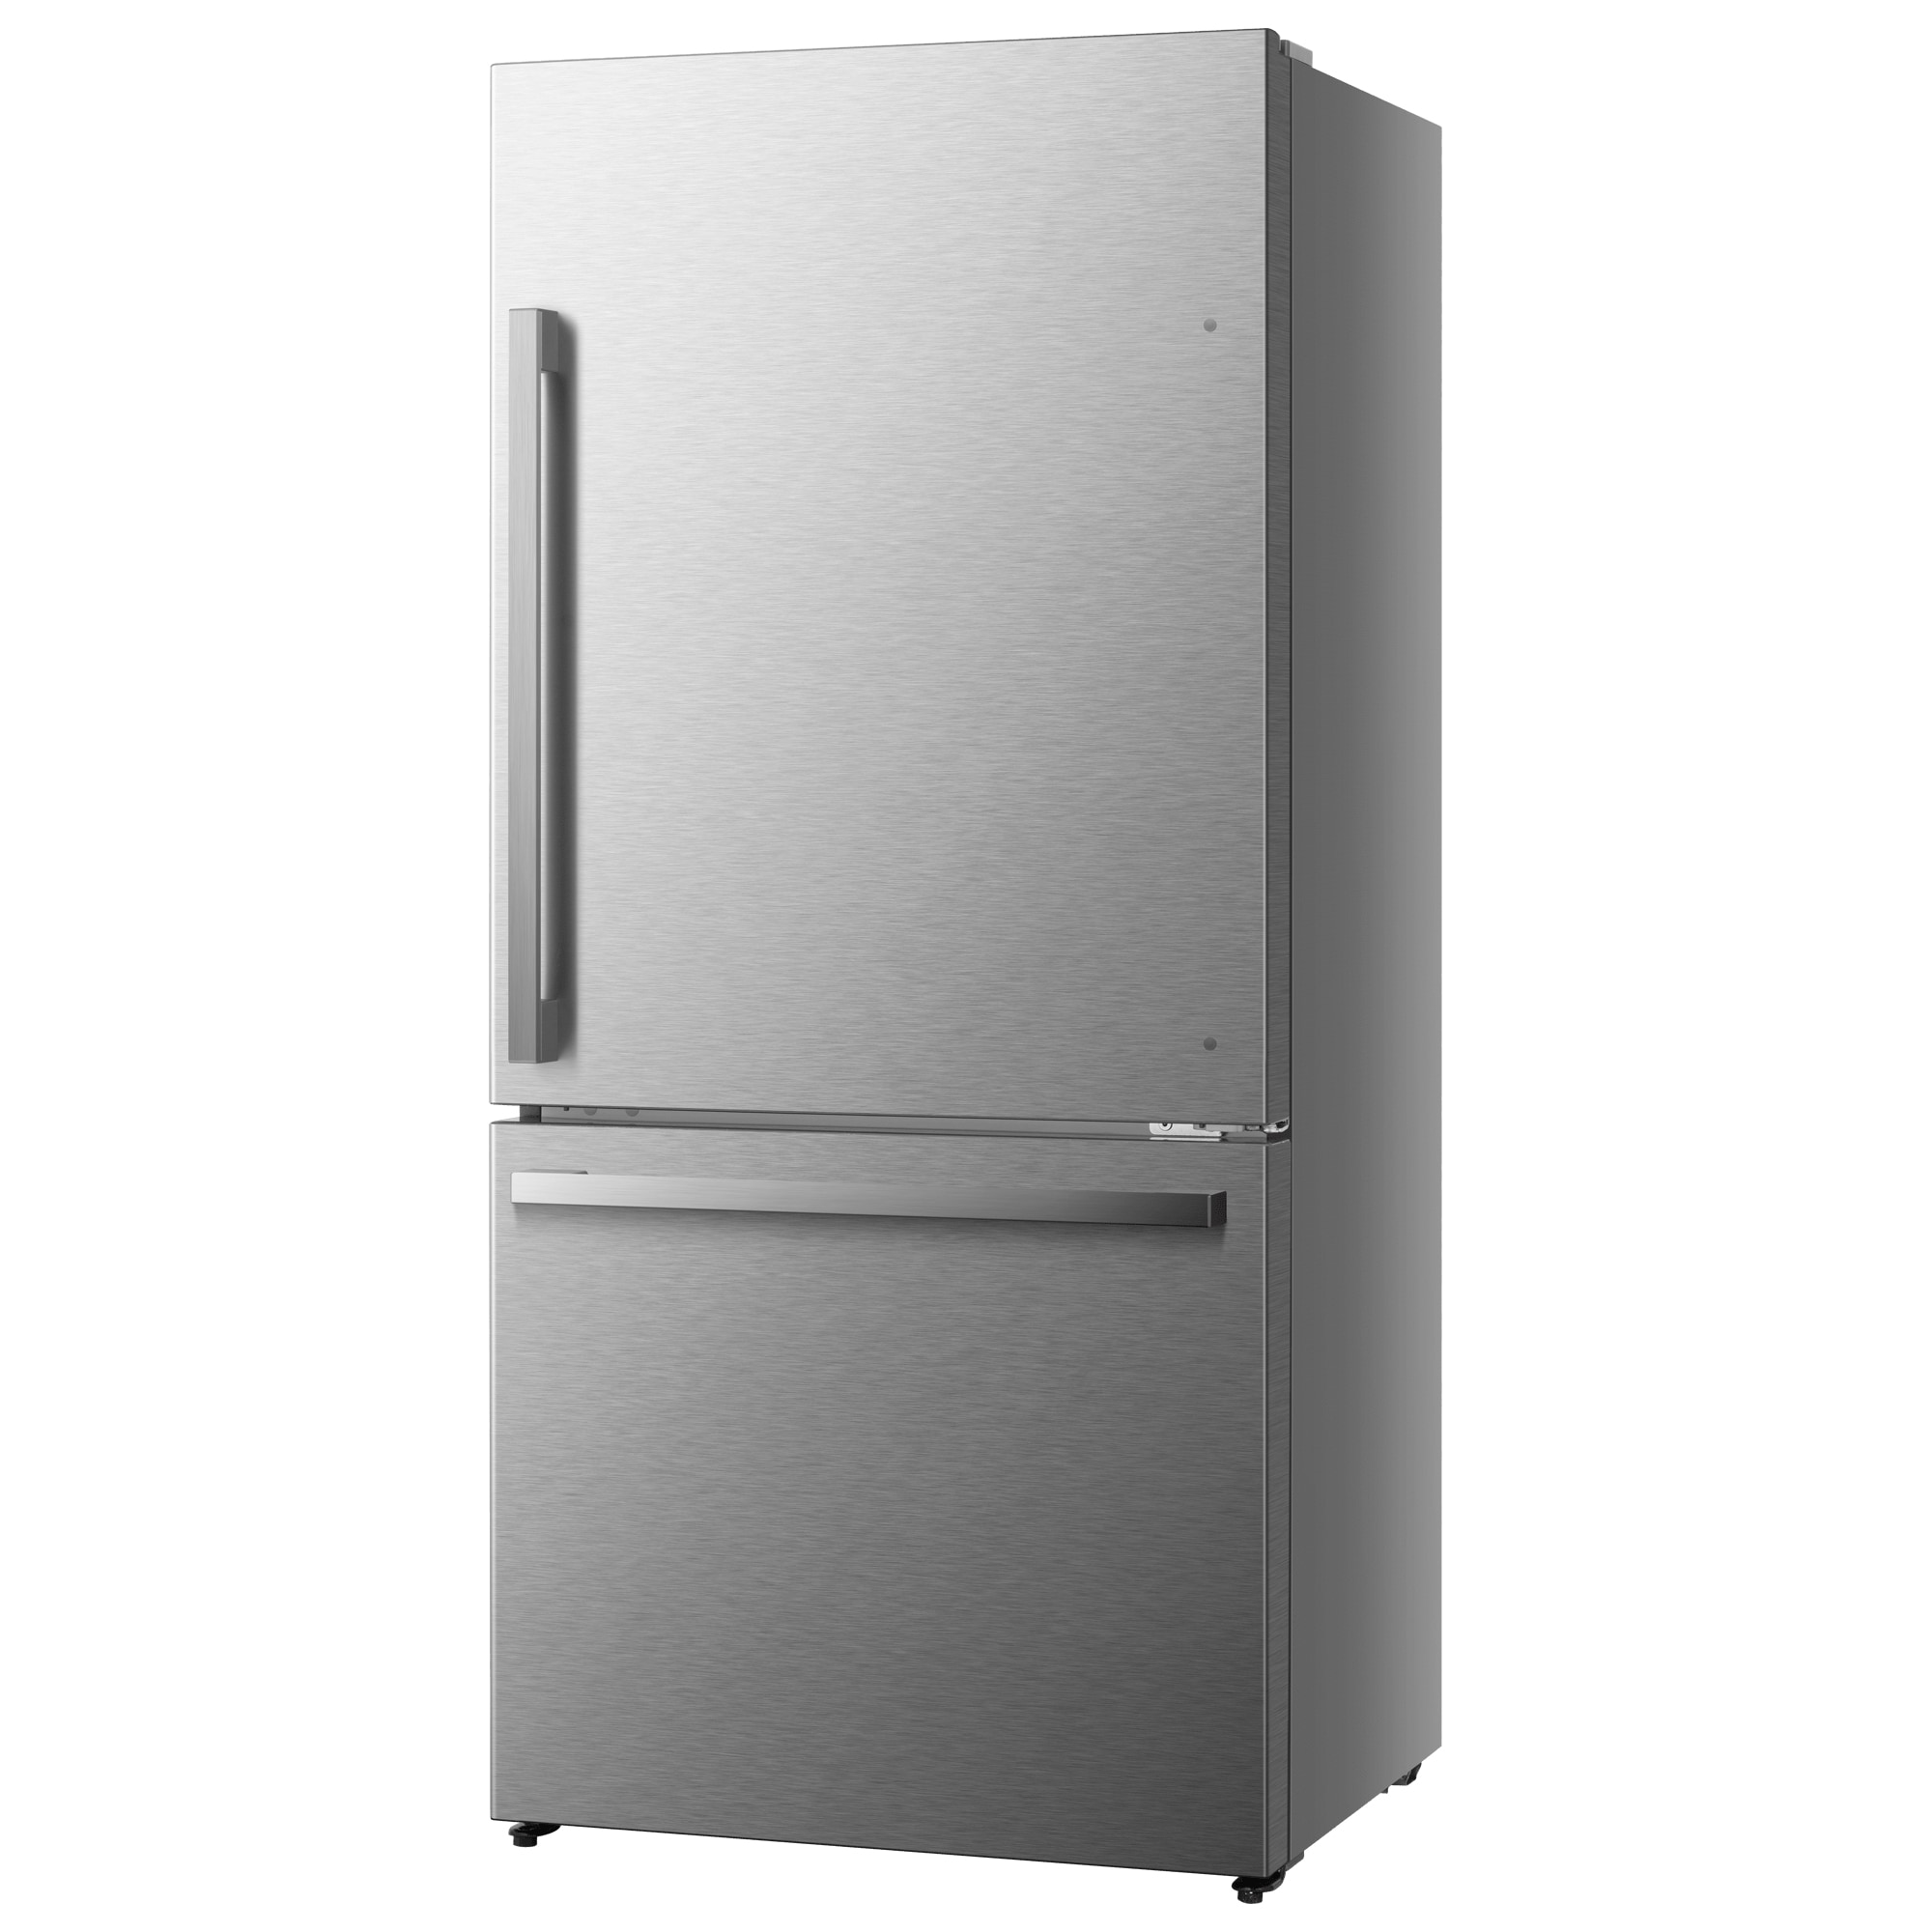 Hisense 17.2-cu ft Counter-depth Bottom-Freezer Refrigerator 